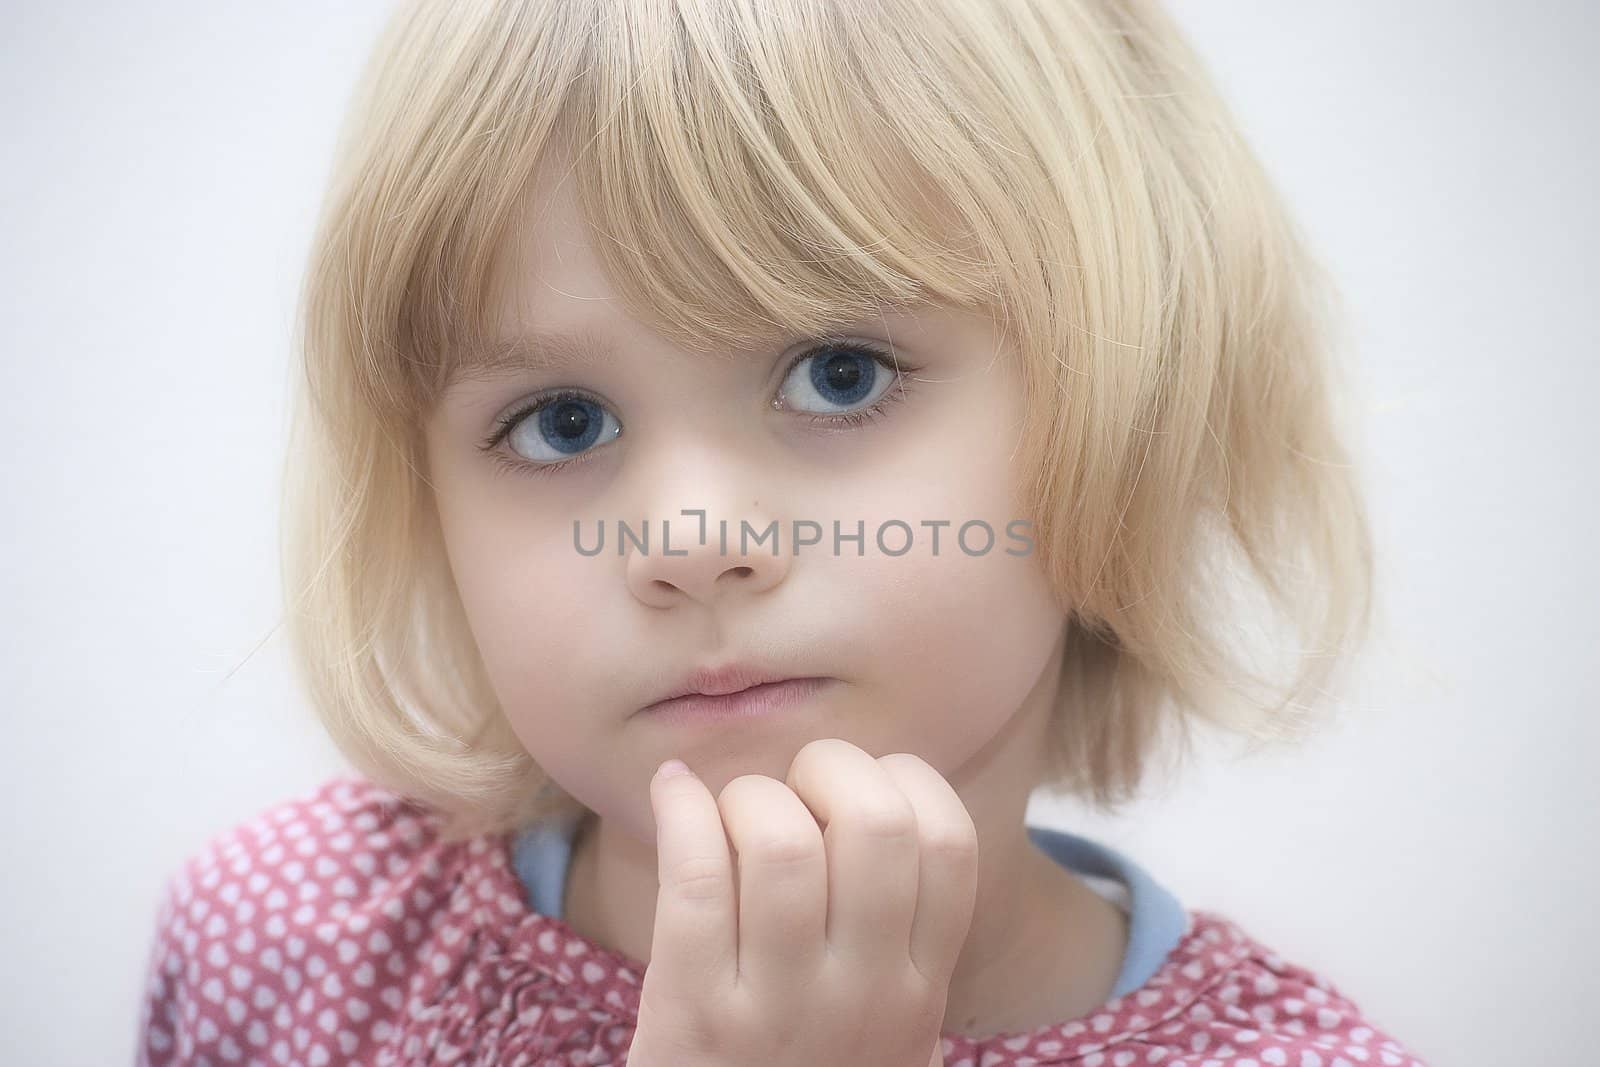 little Girl by miradrozdowski